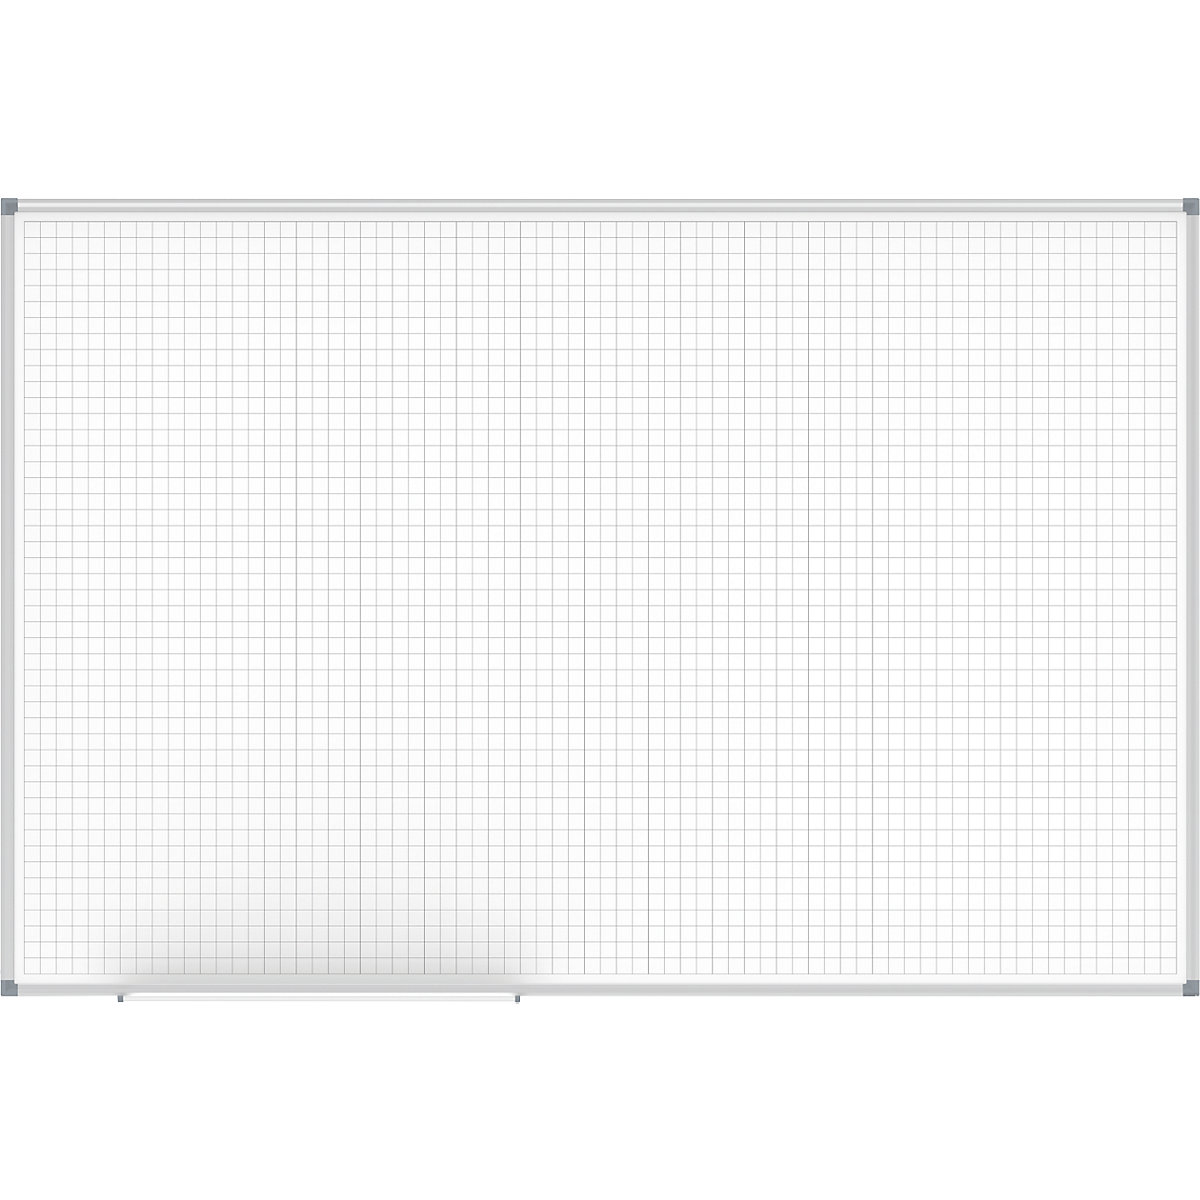 Quadro quadriculado MAULstandard, branco – MAUL, quadrícula 20 x 20 mm, LxA 1500 x 1000 mm-3